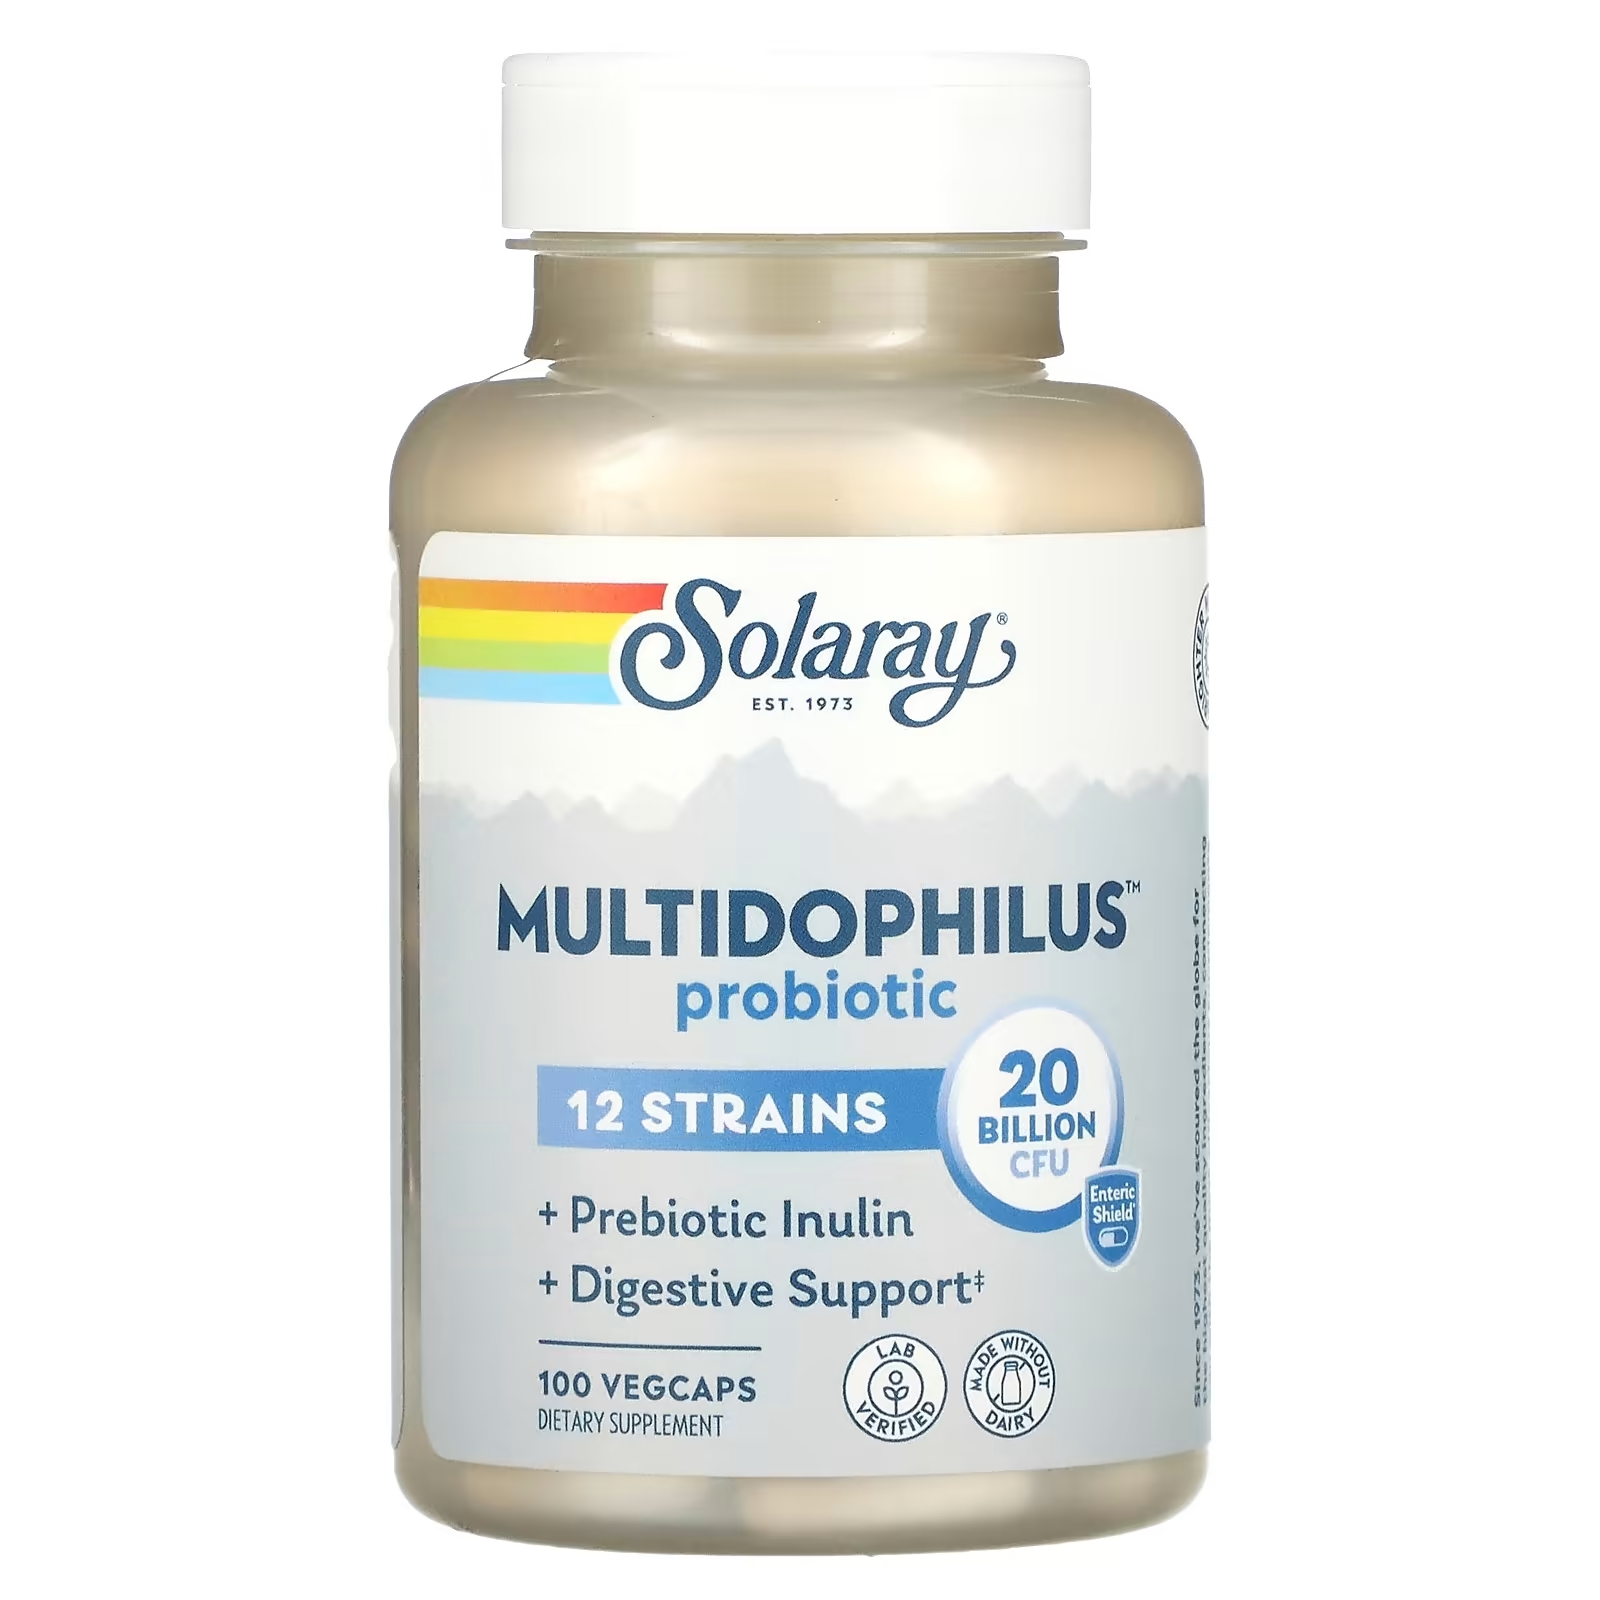 solaray super multidophilus пробиотики 15 млрд кое 60 капсул vegcaps с кишечнорастворимой оболочкой Solaray Multidophilus Probiotic пробиотик 20 млрд КОЕ, 100 вегетарианских капсул VegCaps